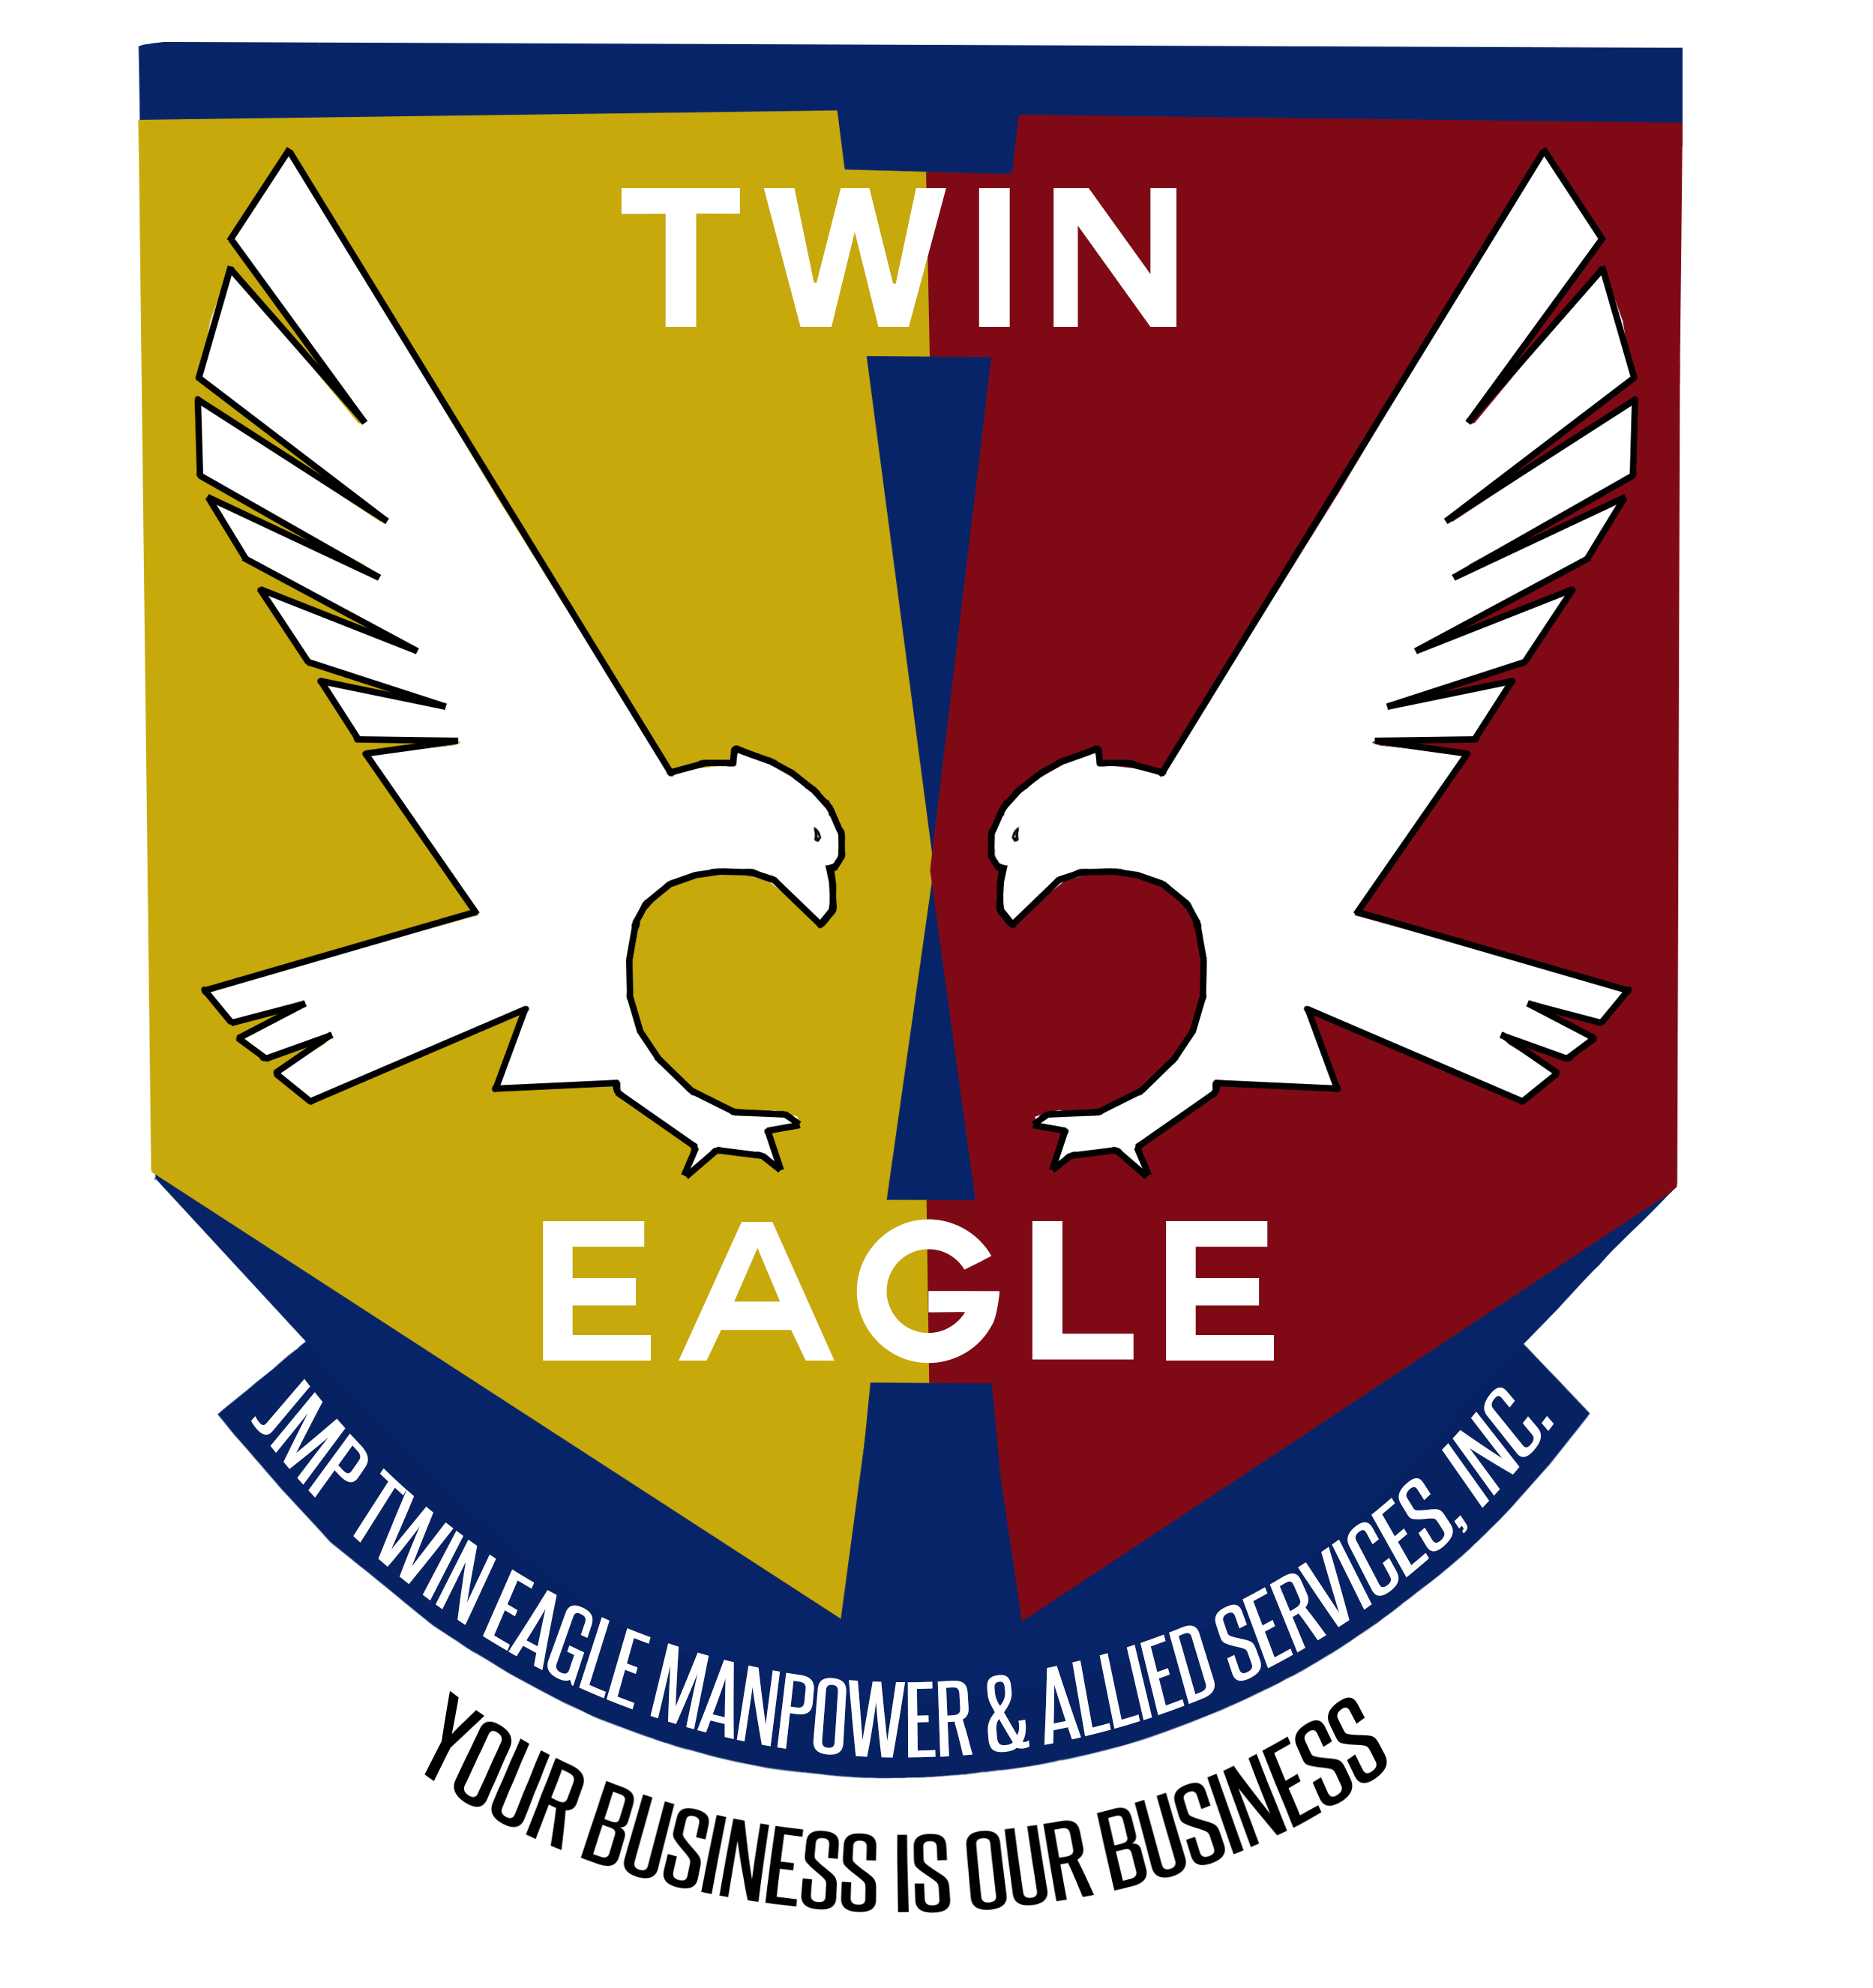 JMP Twin Eagle Manpower & Allied Services Inc.